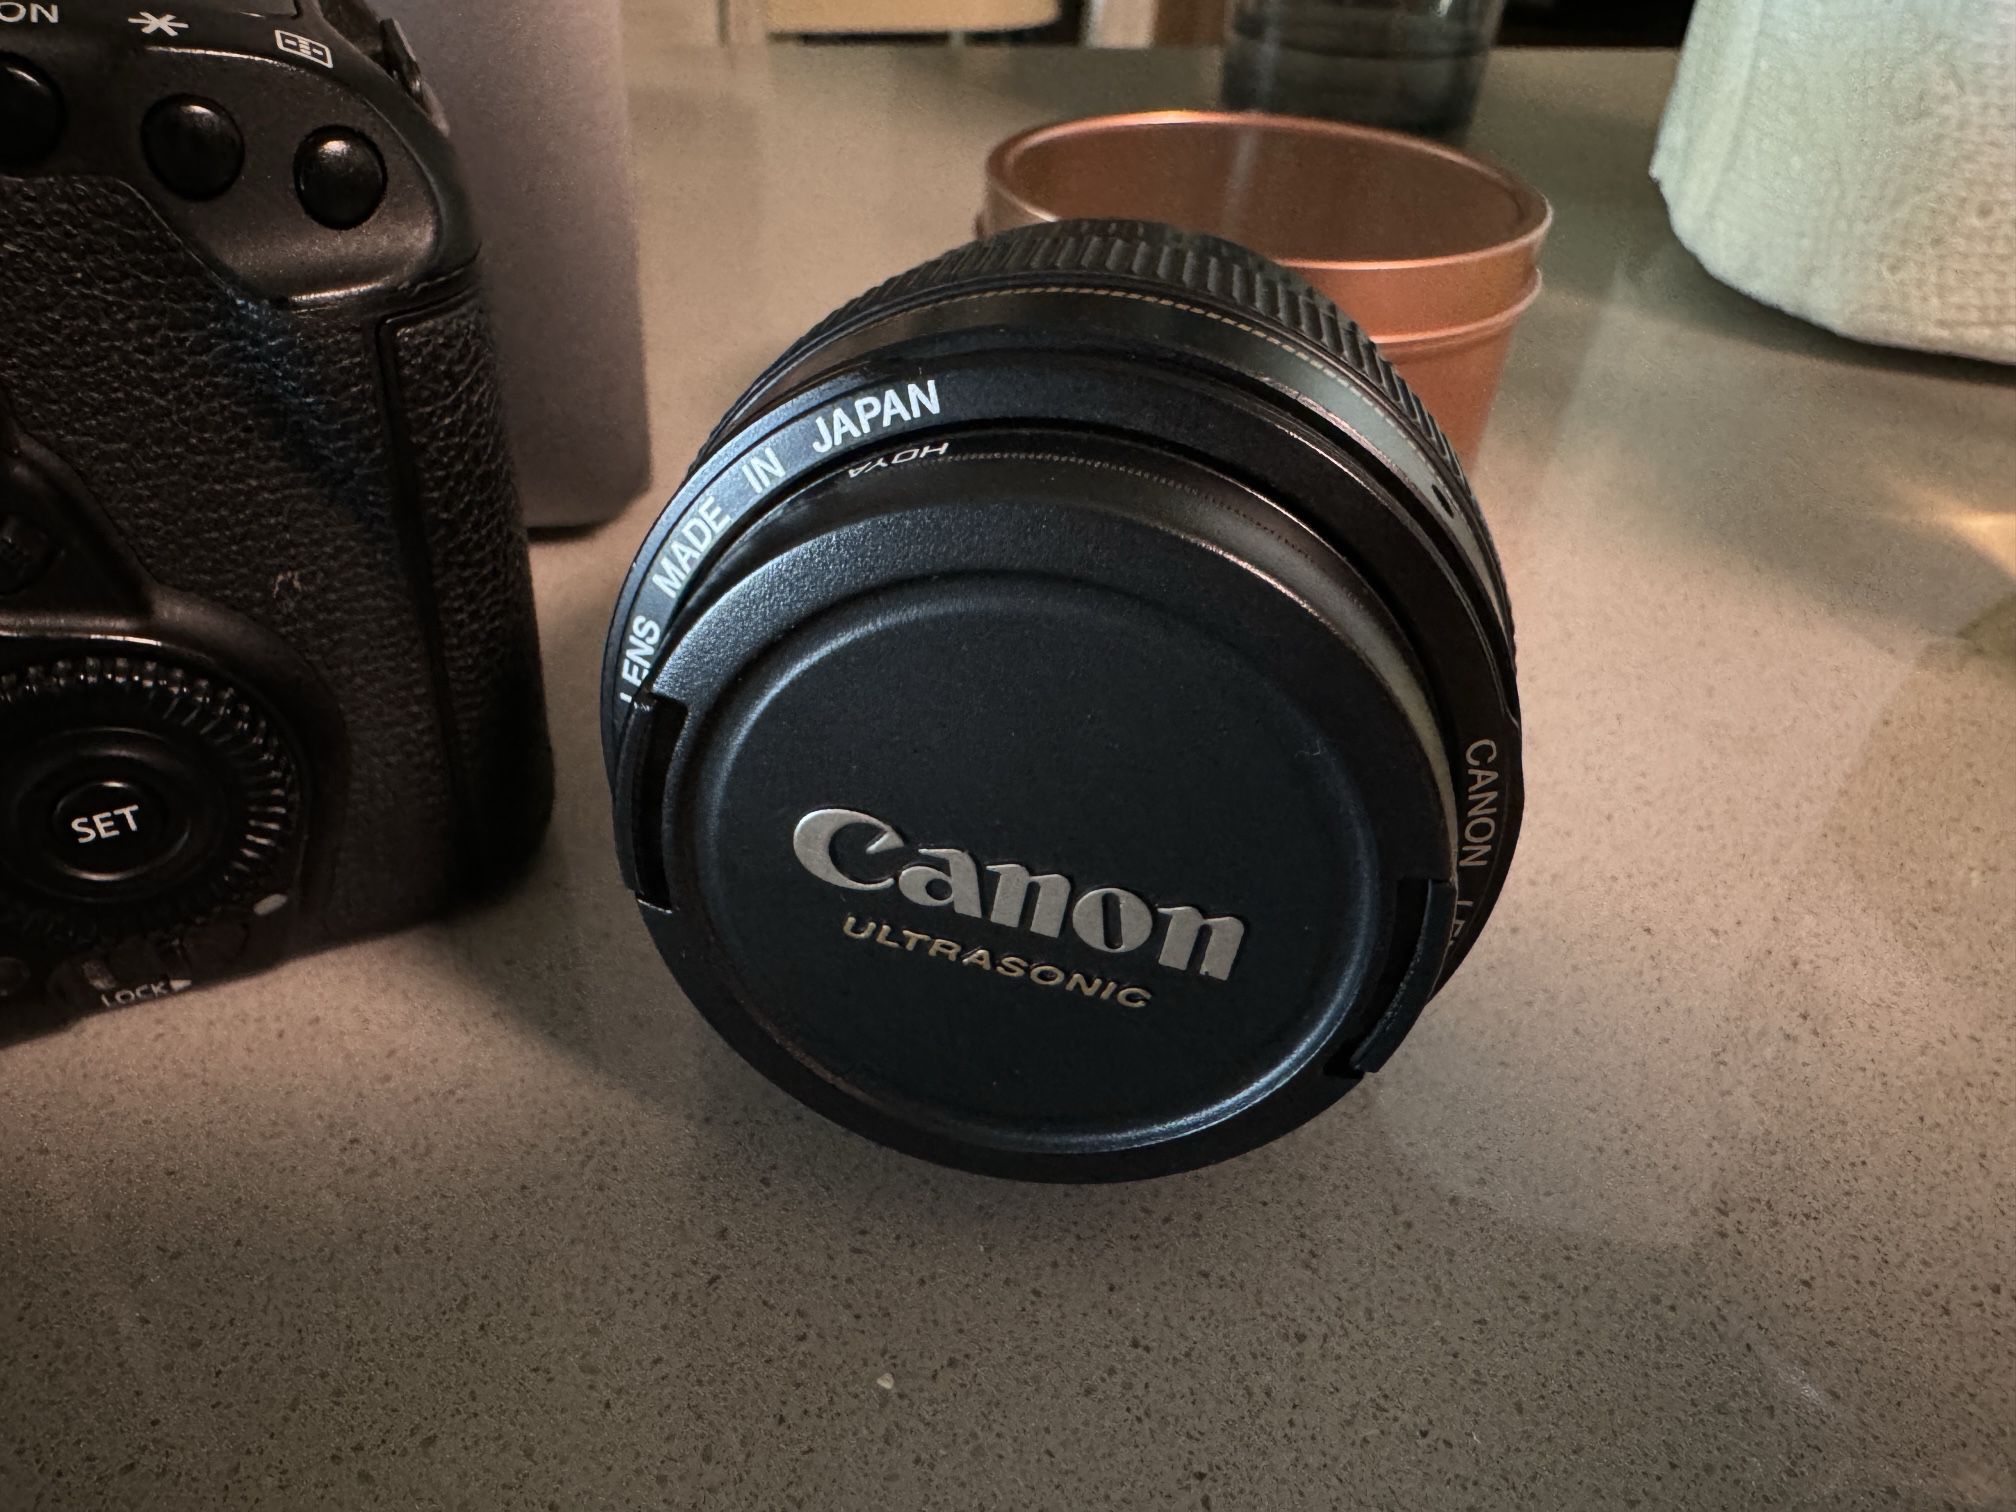 CANON 50mm /f1.1.4 Ultrasonic Lense